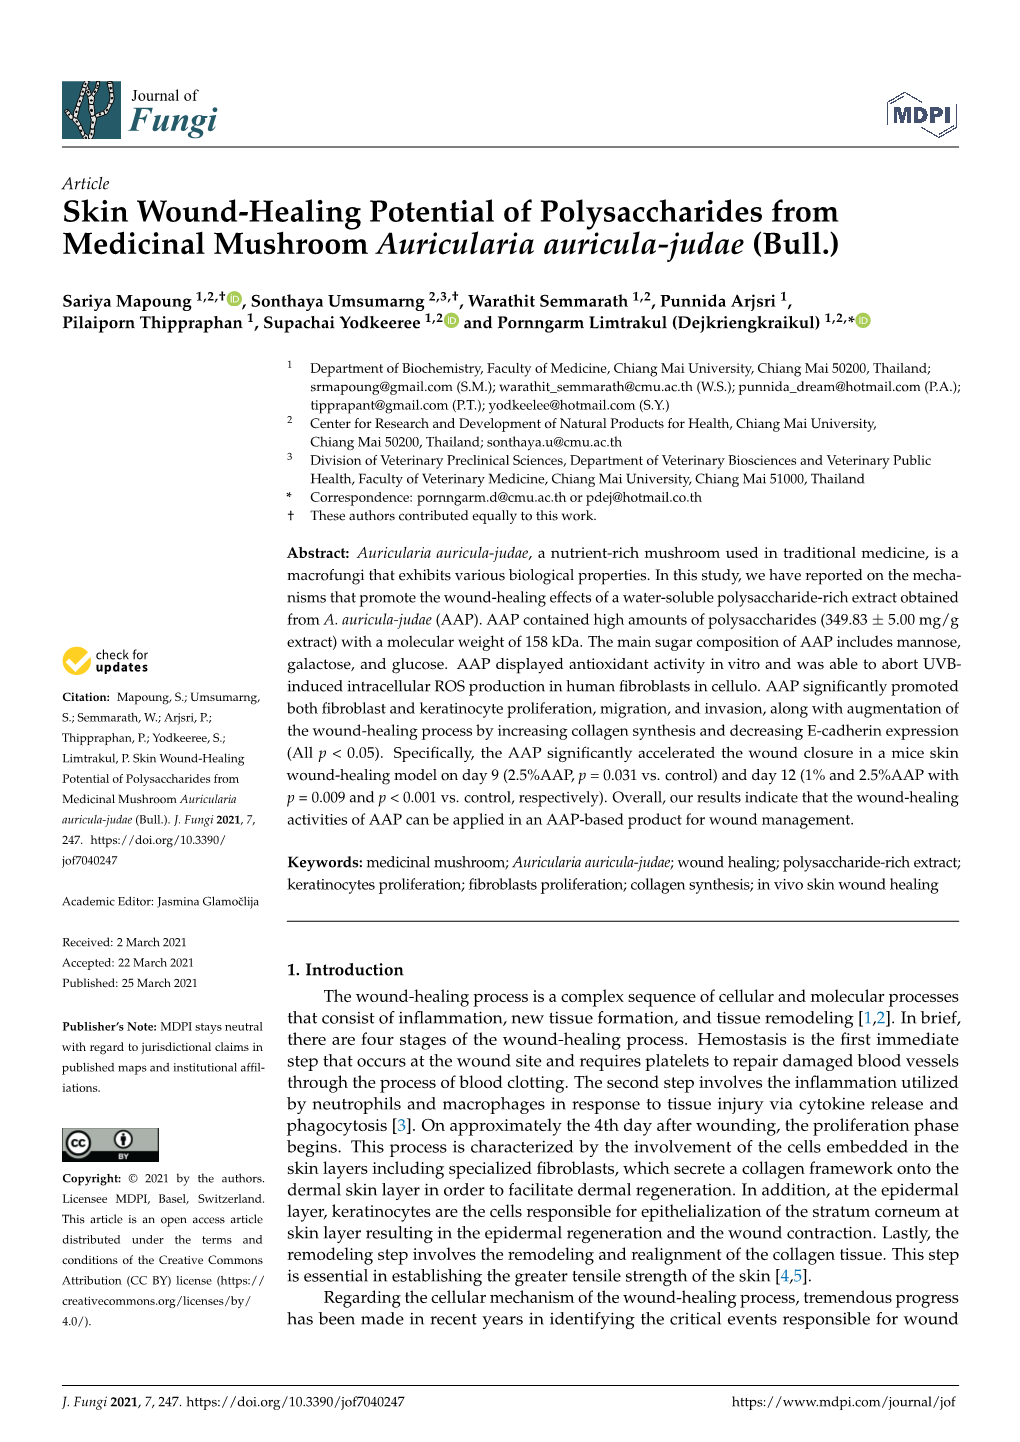 Skin Wound-Healing Potential of Polysaccharides from Medicinal Mushroom Auricularia Auricula-Judae (Bull.)